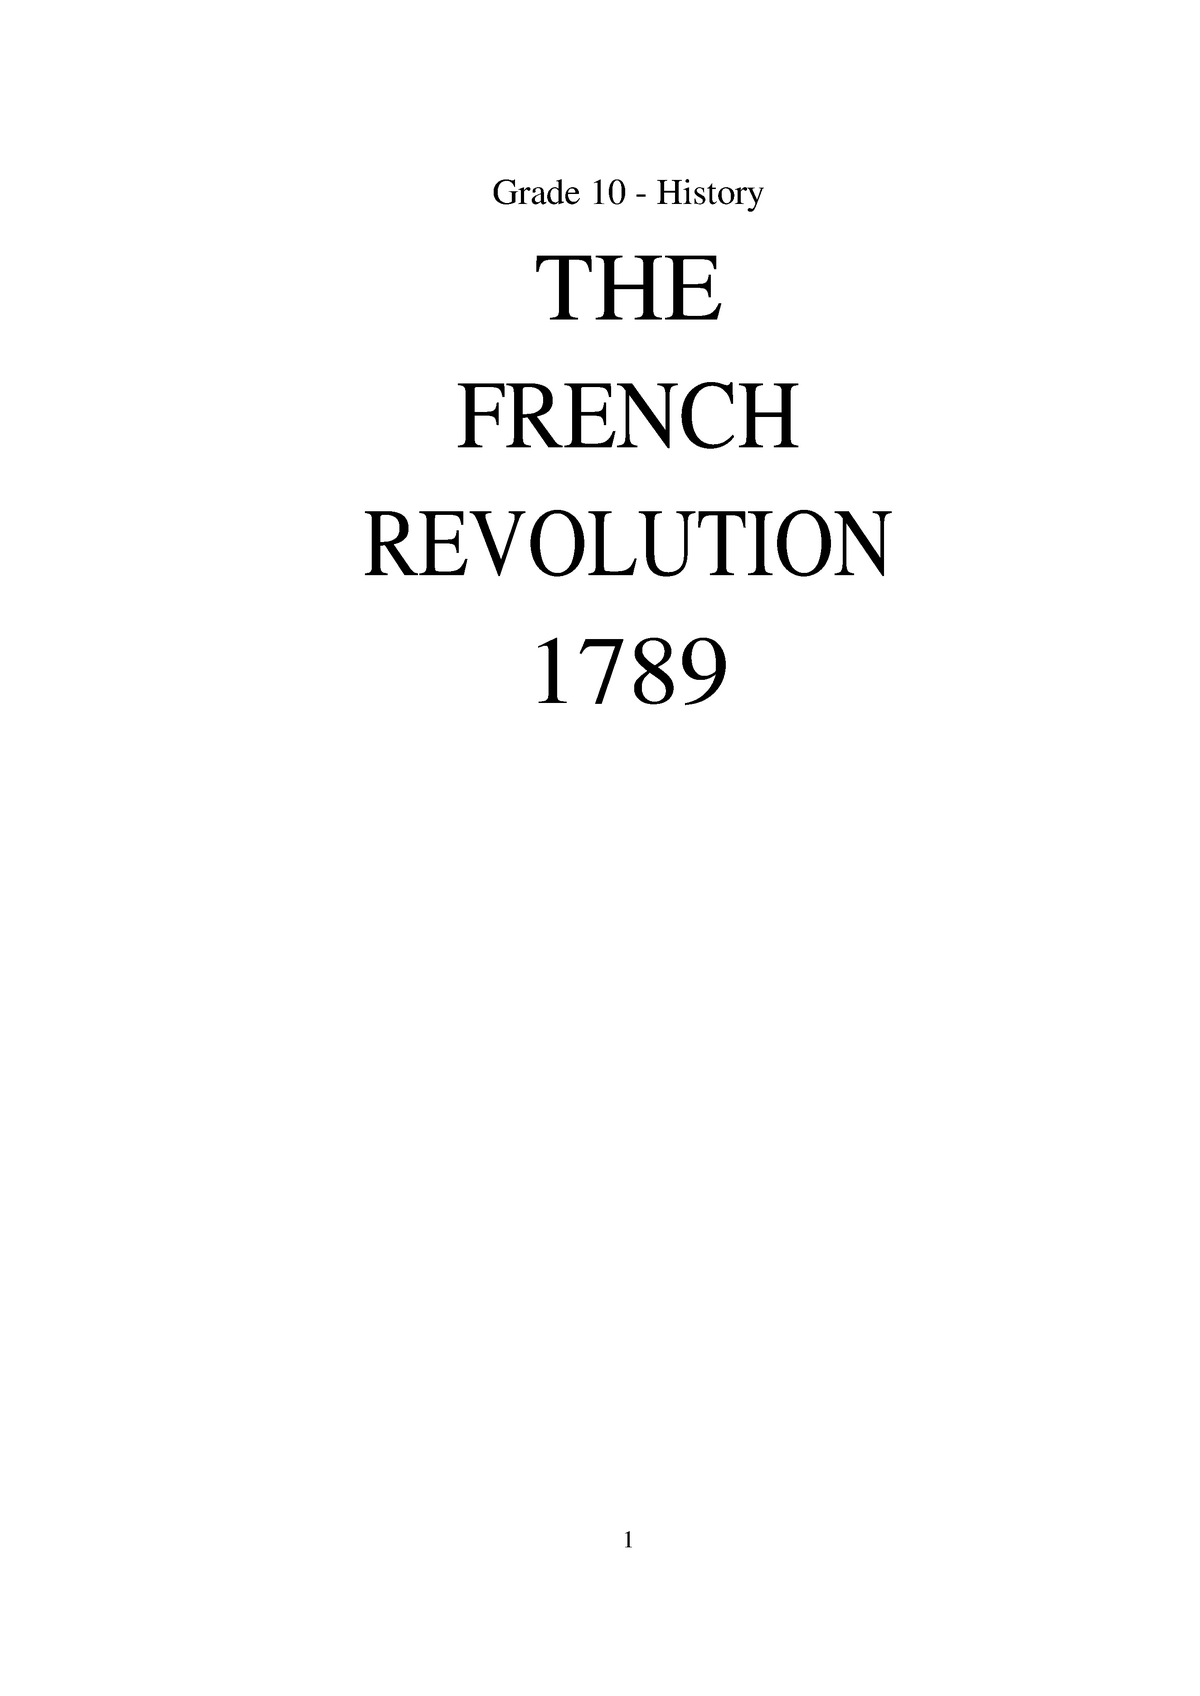 french revolution essay grade 10